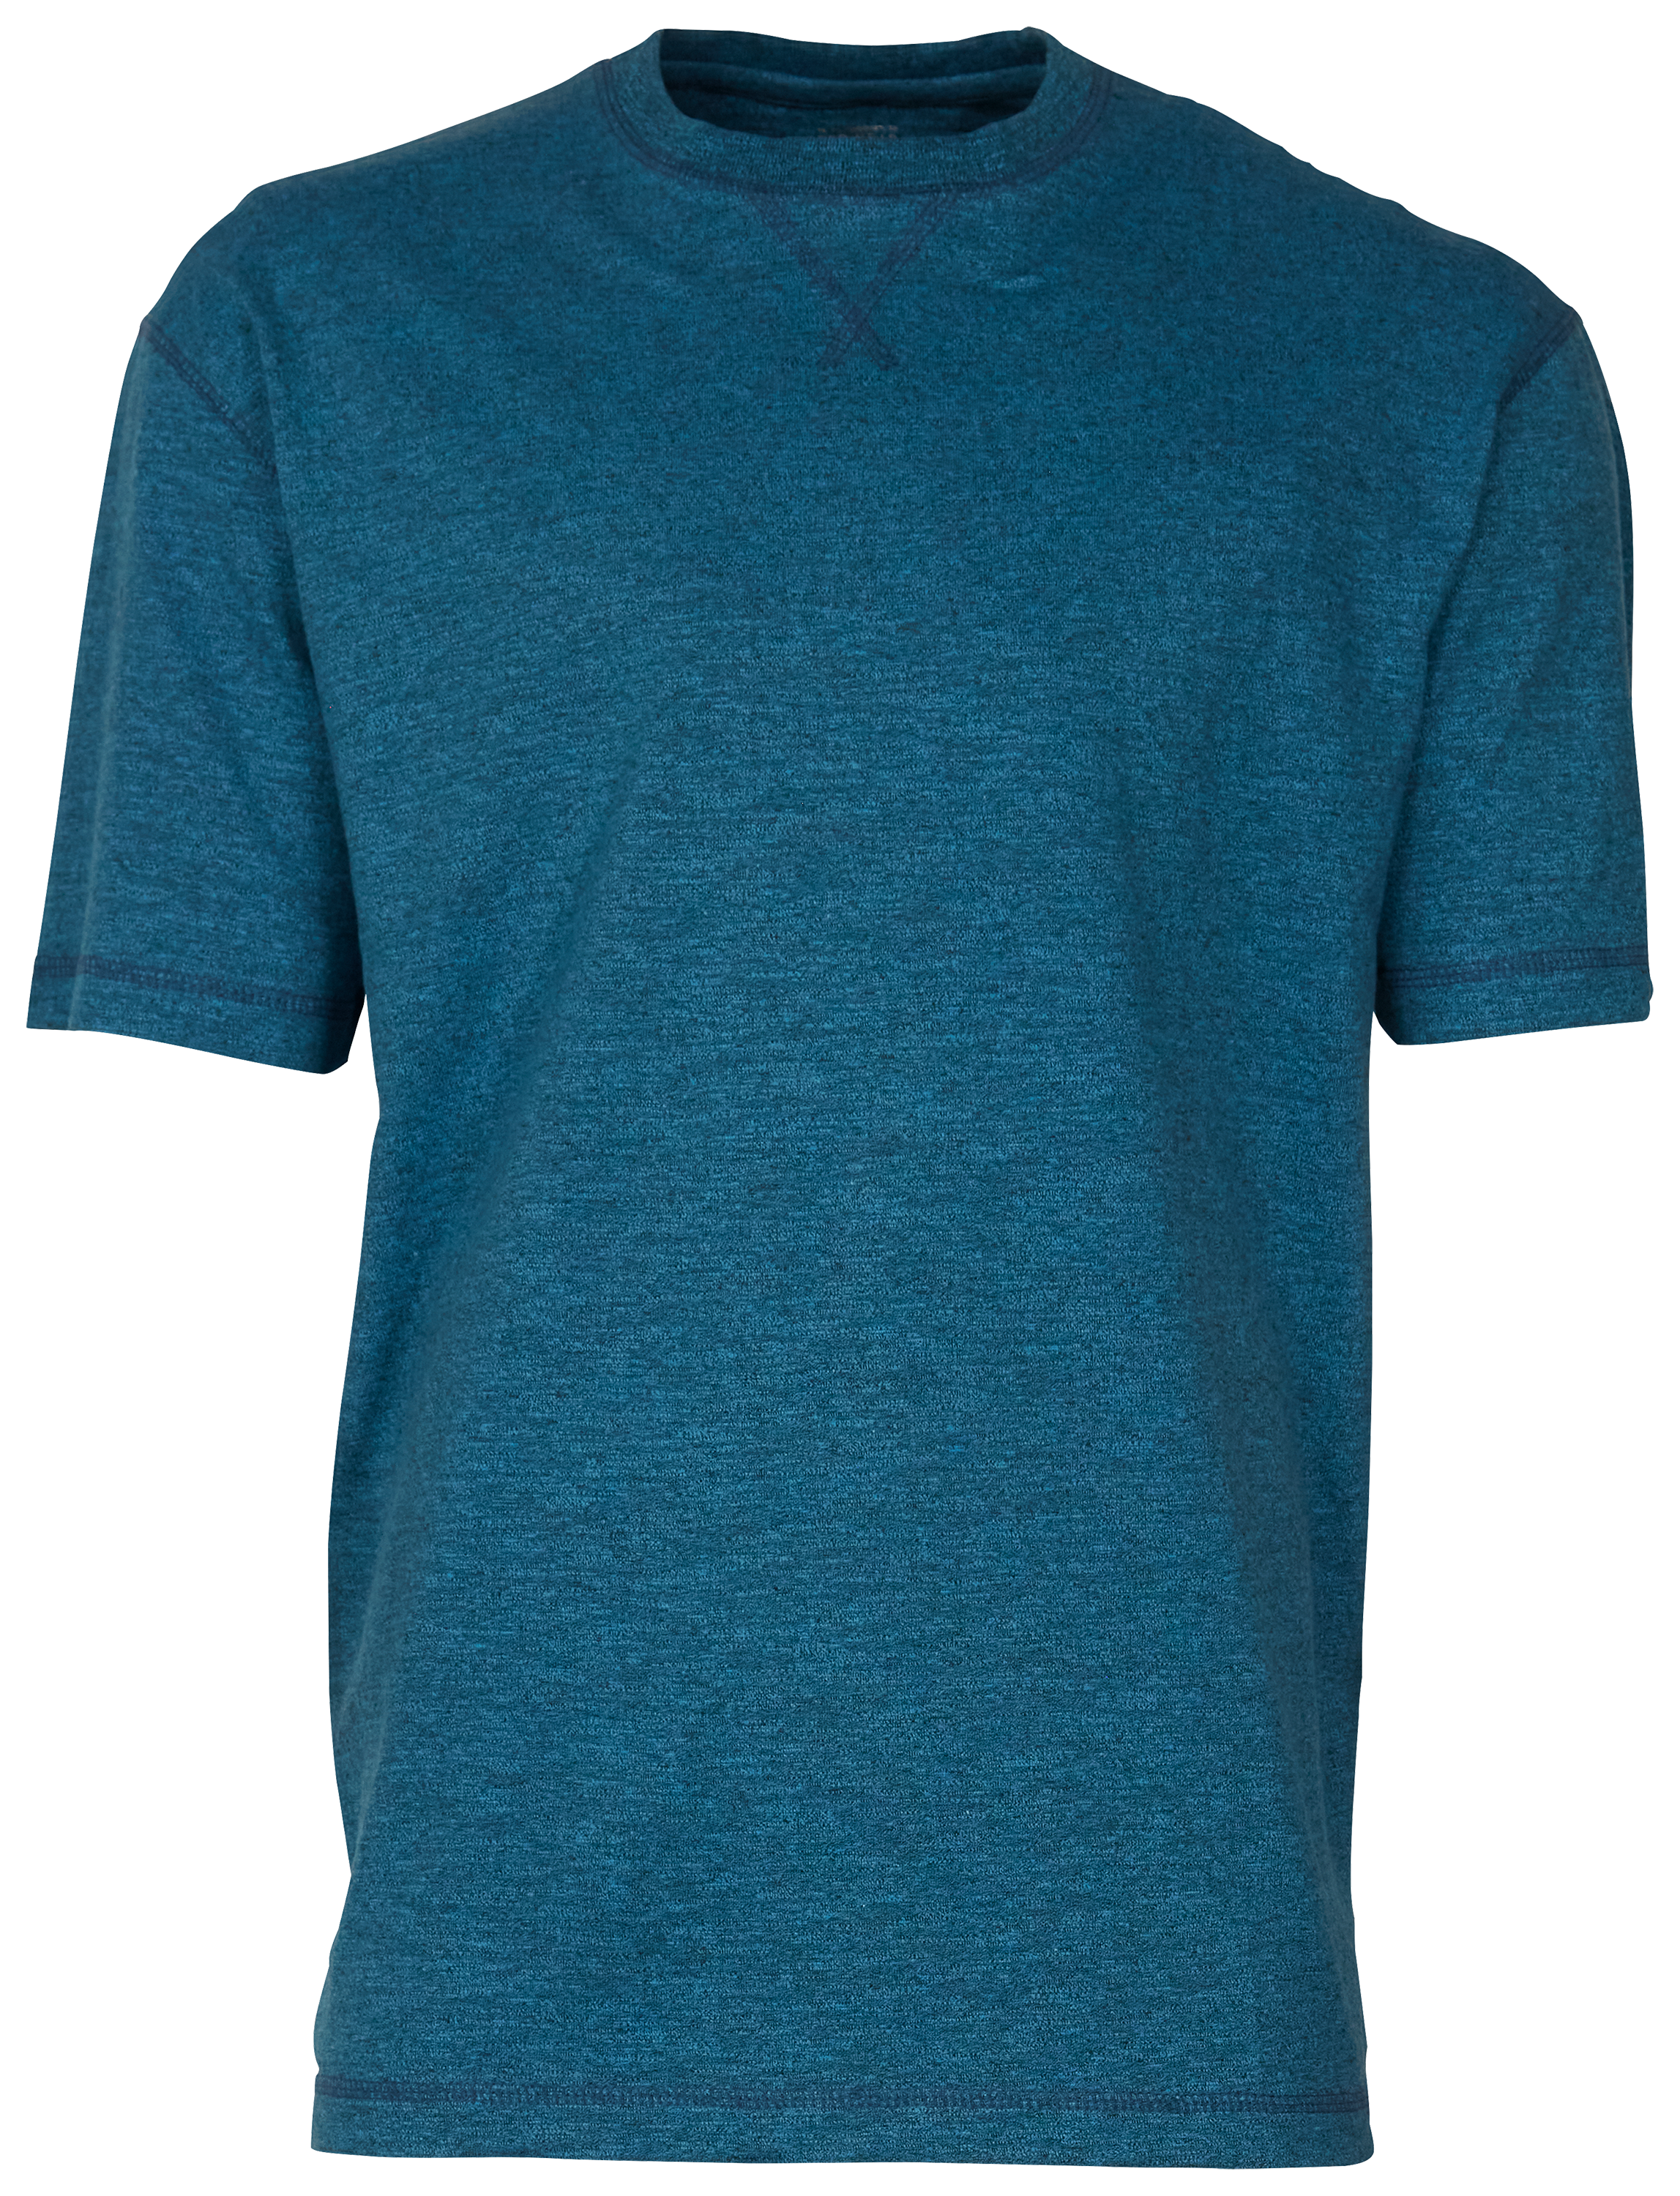 RedHead Gray's Creek Short-Sleeve T-Shirt for Men - Ocean - M